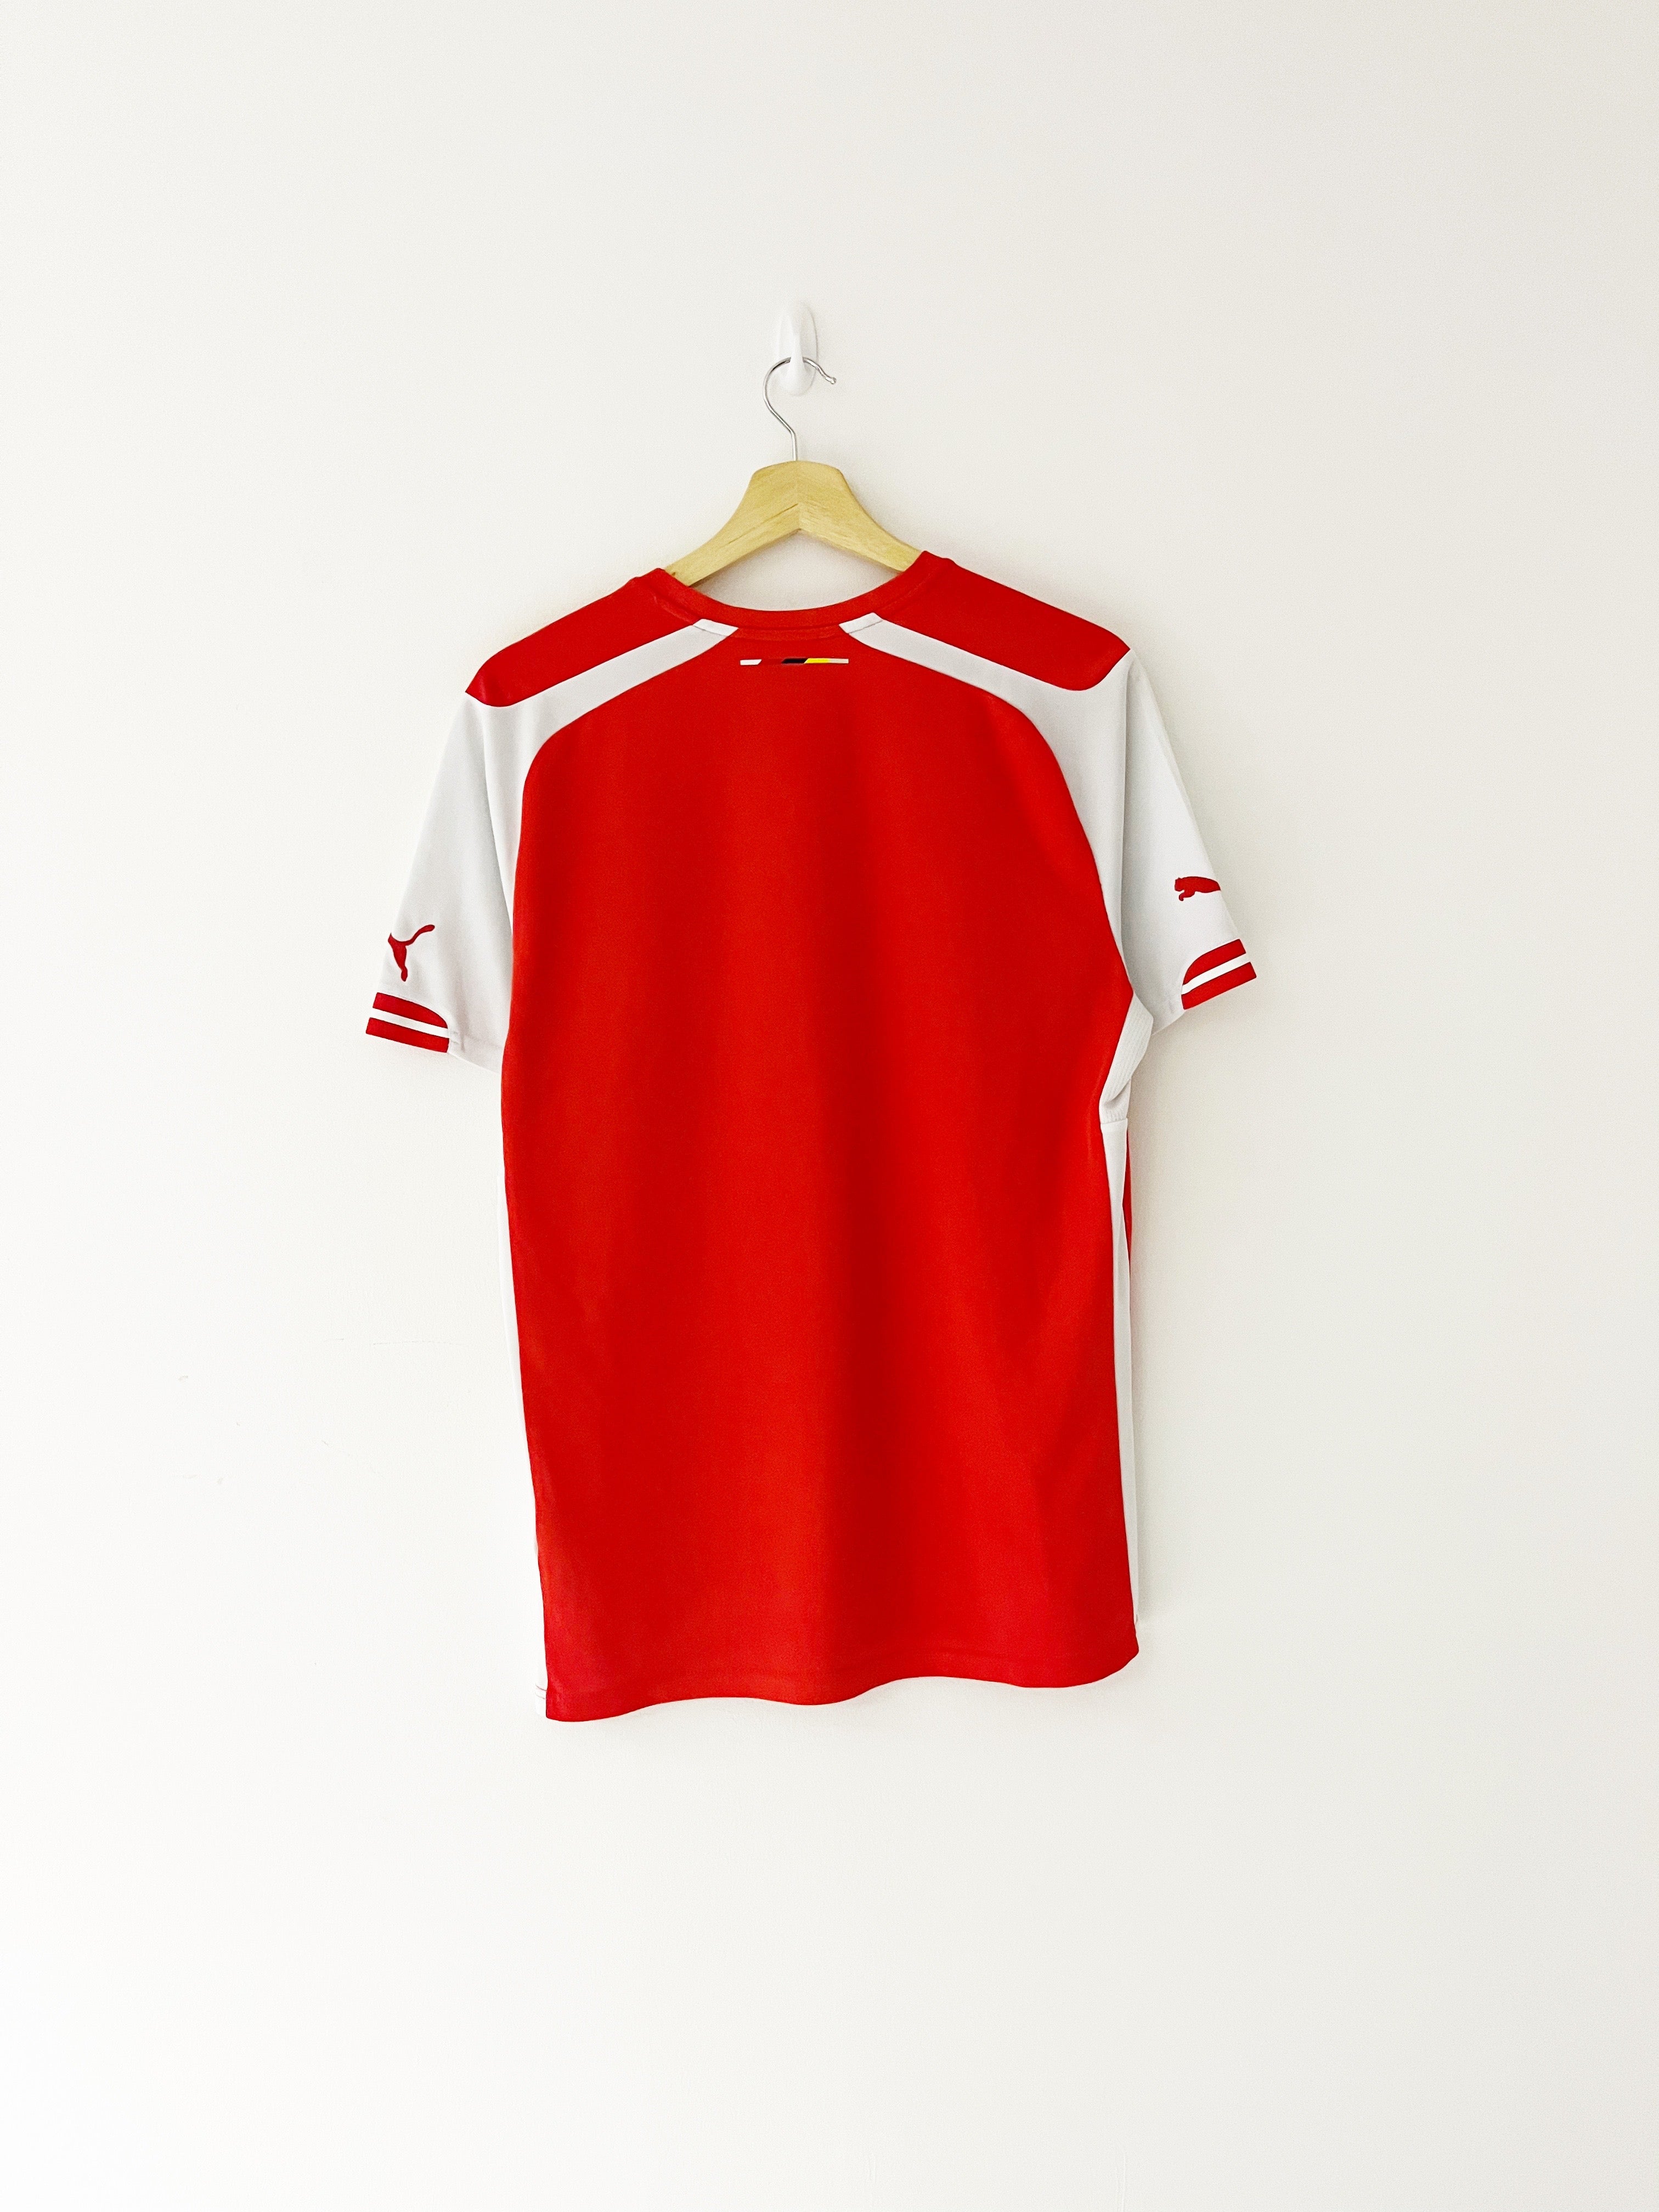 2014/15 Arsenal Home Shirt (M) 9/10